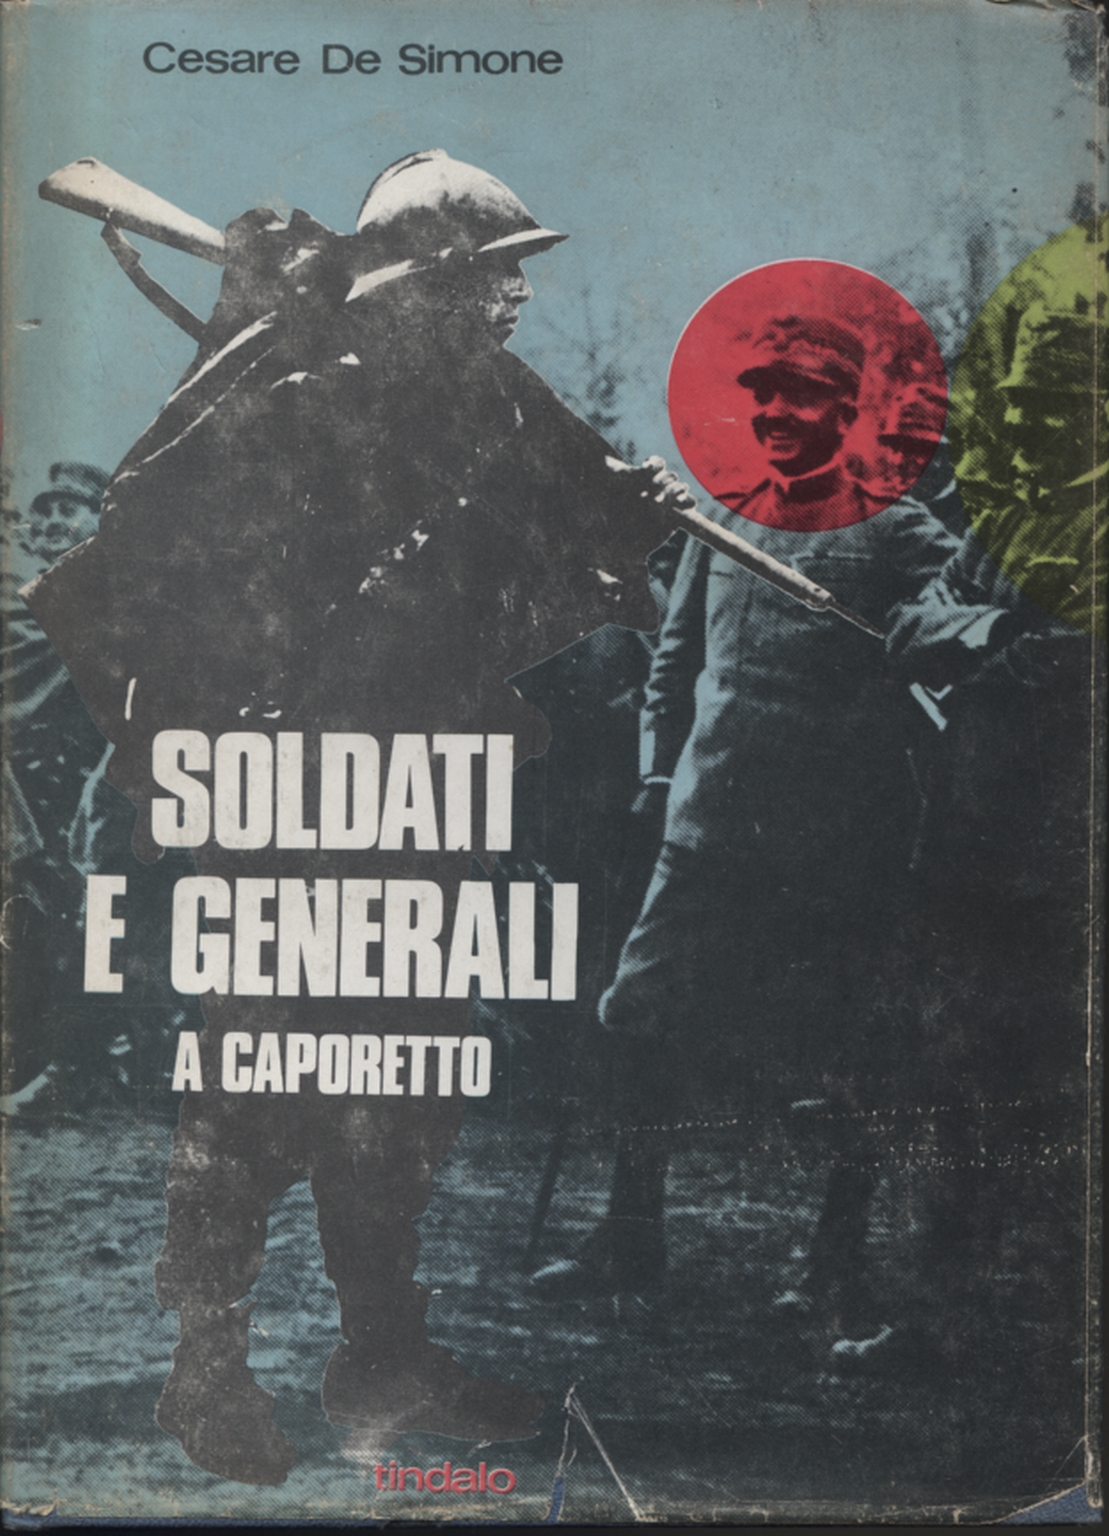 The soldiers and general at Caporetto, Cesare De Simone